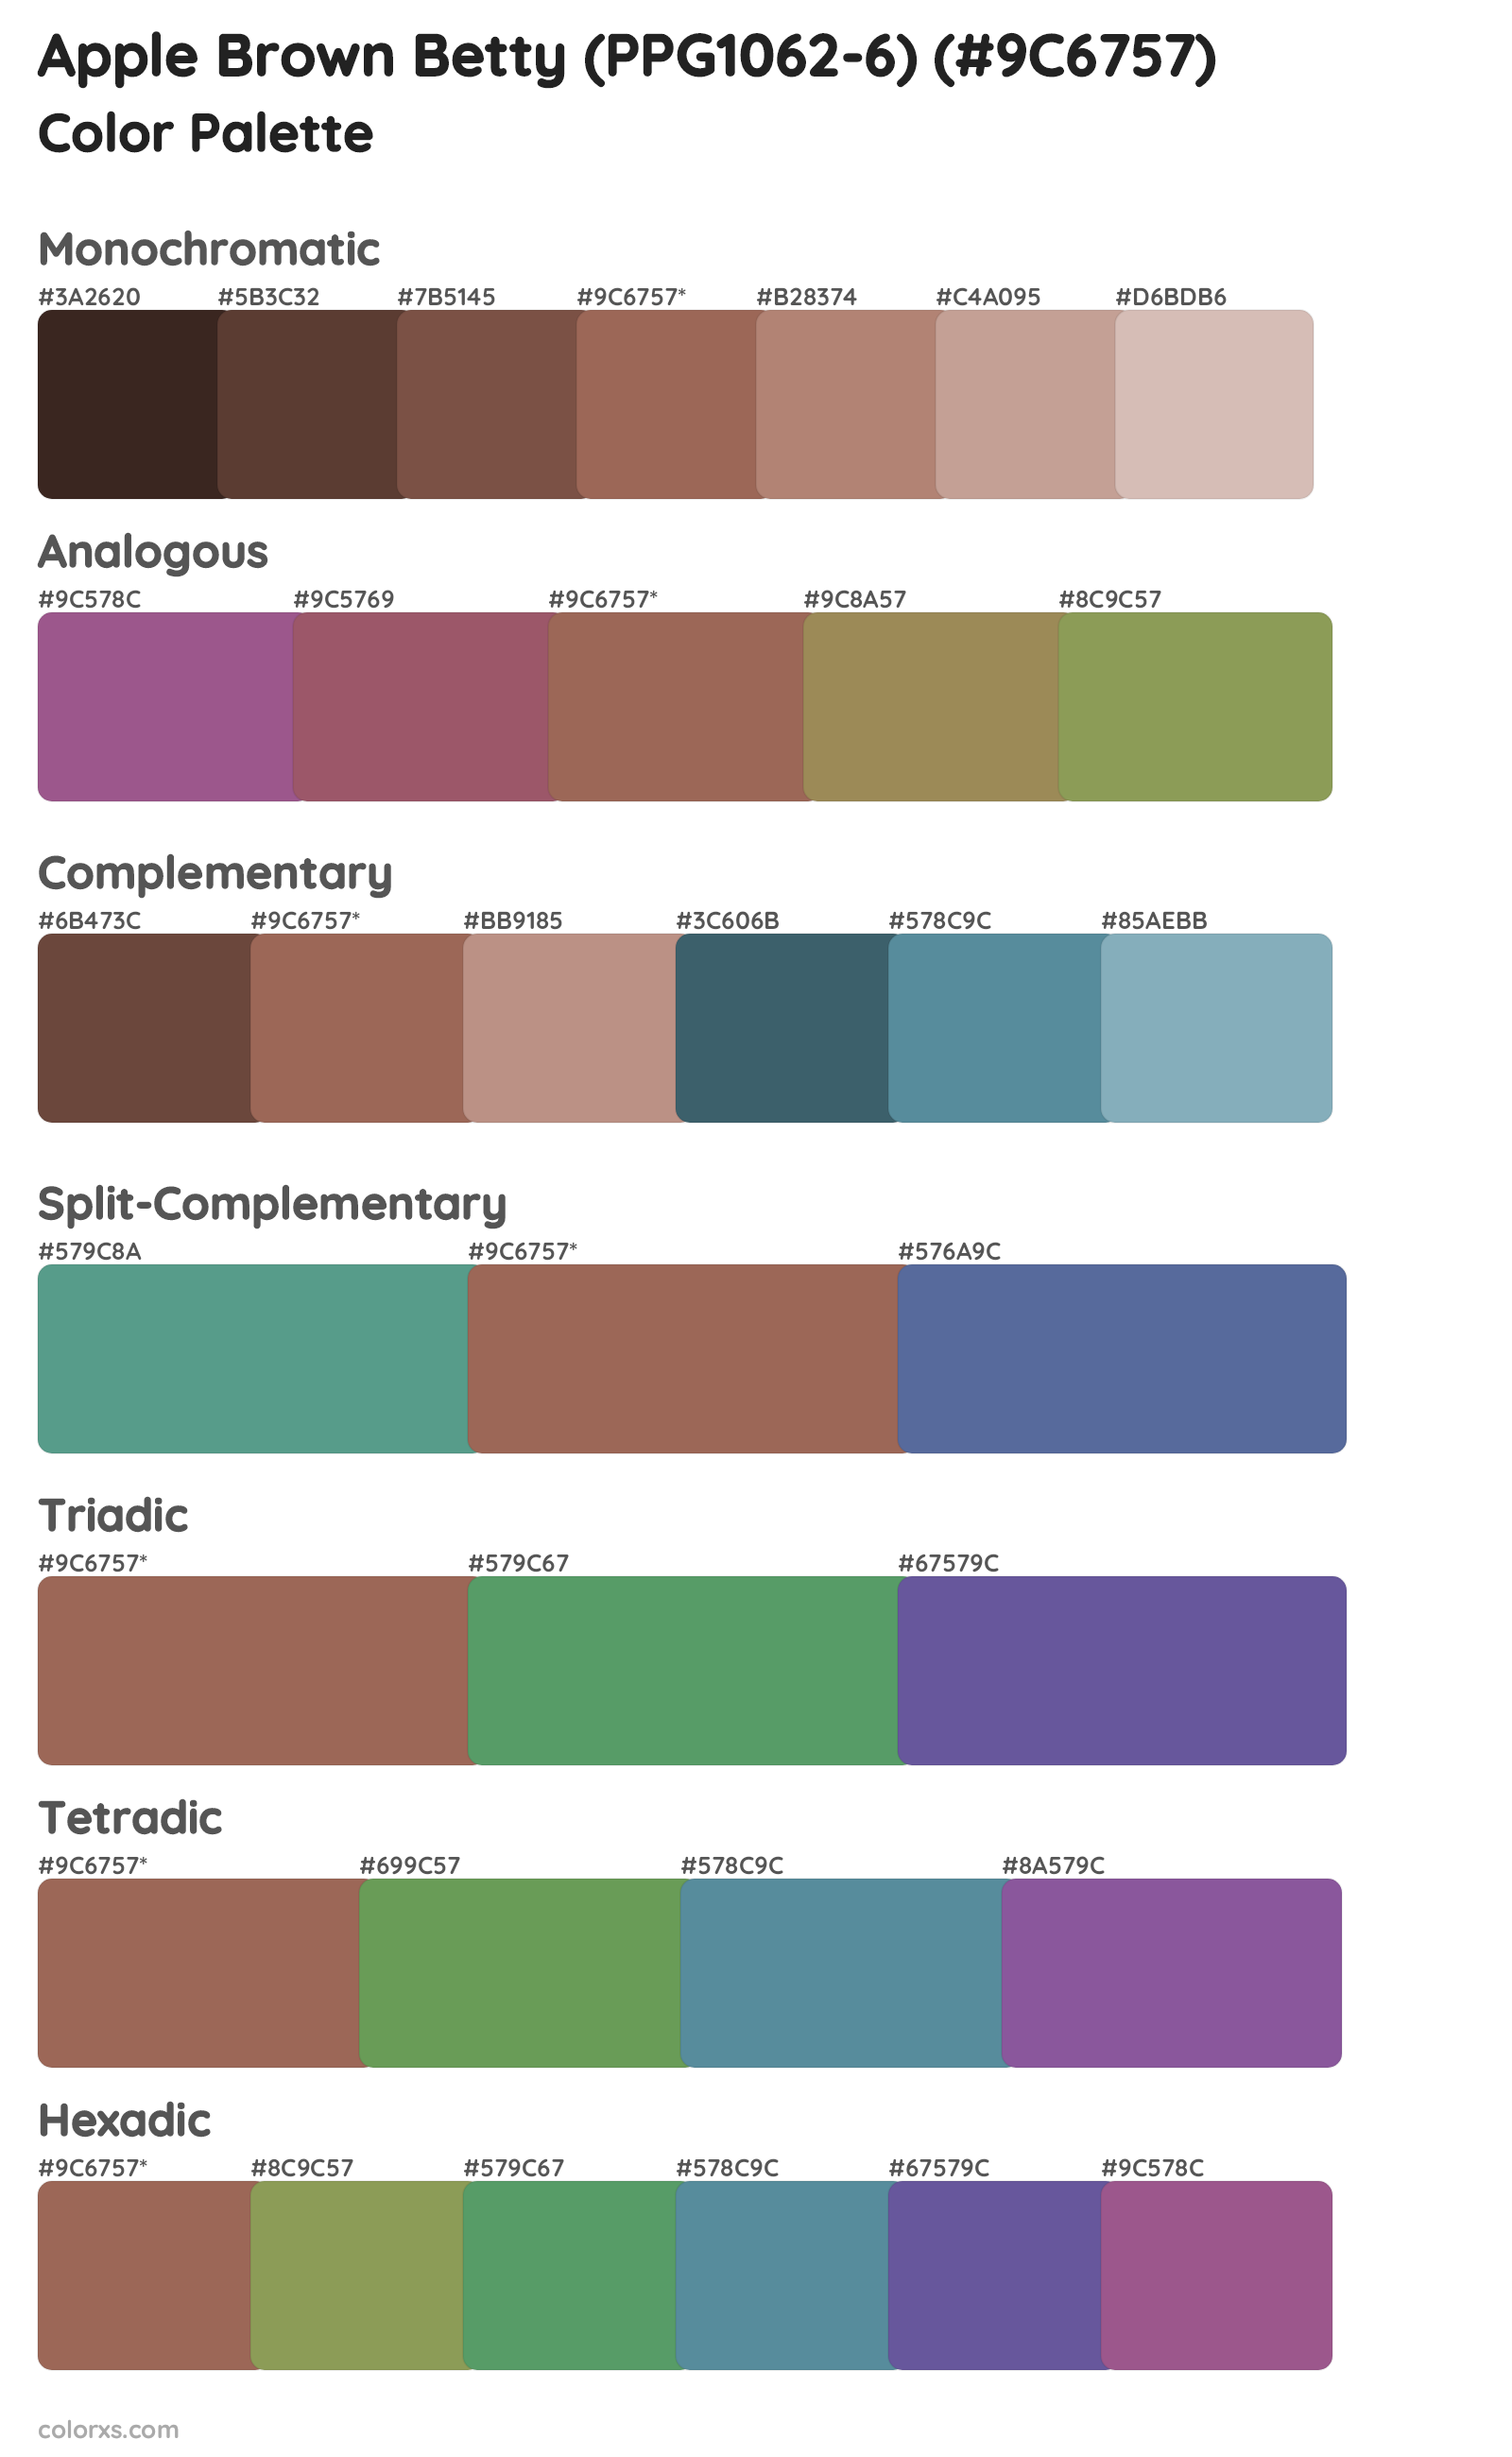 Apple Brown Betty (PPG1062-6) Color Scheme Palettes